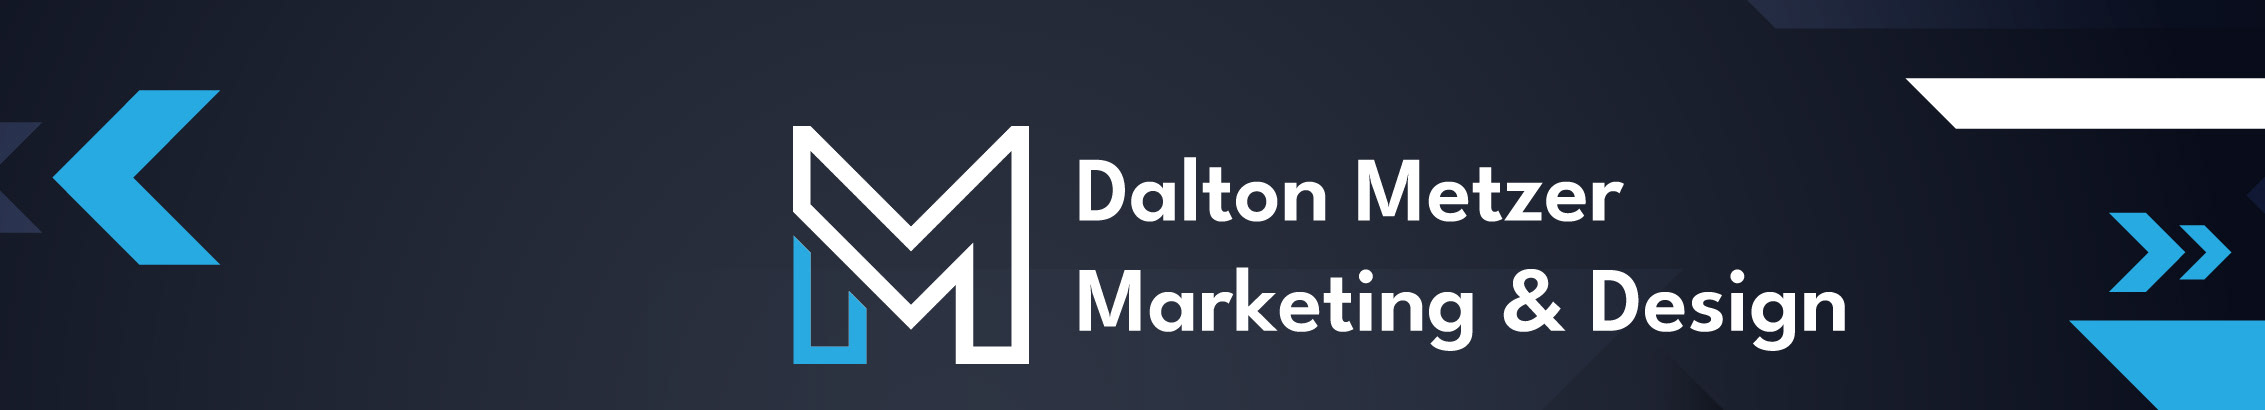 Dalton Metzer's profile banner